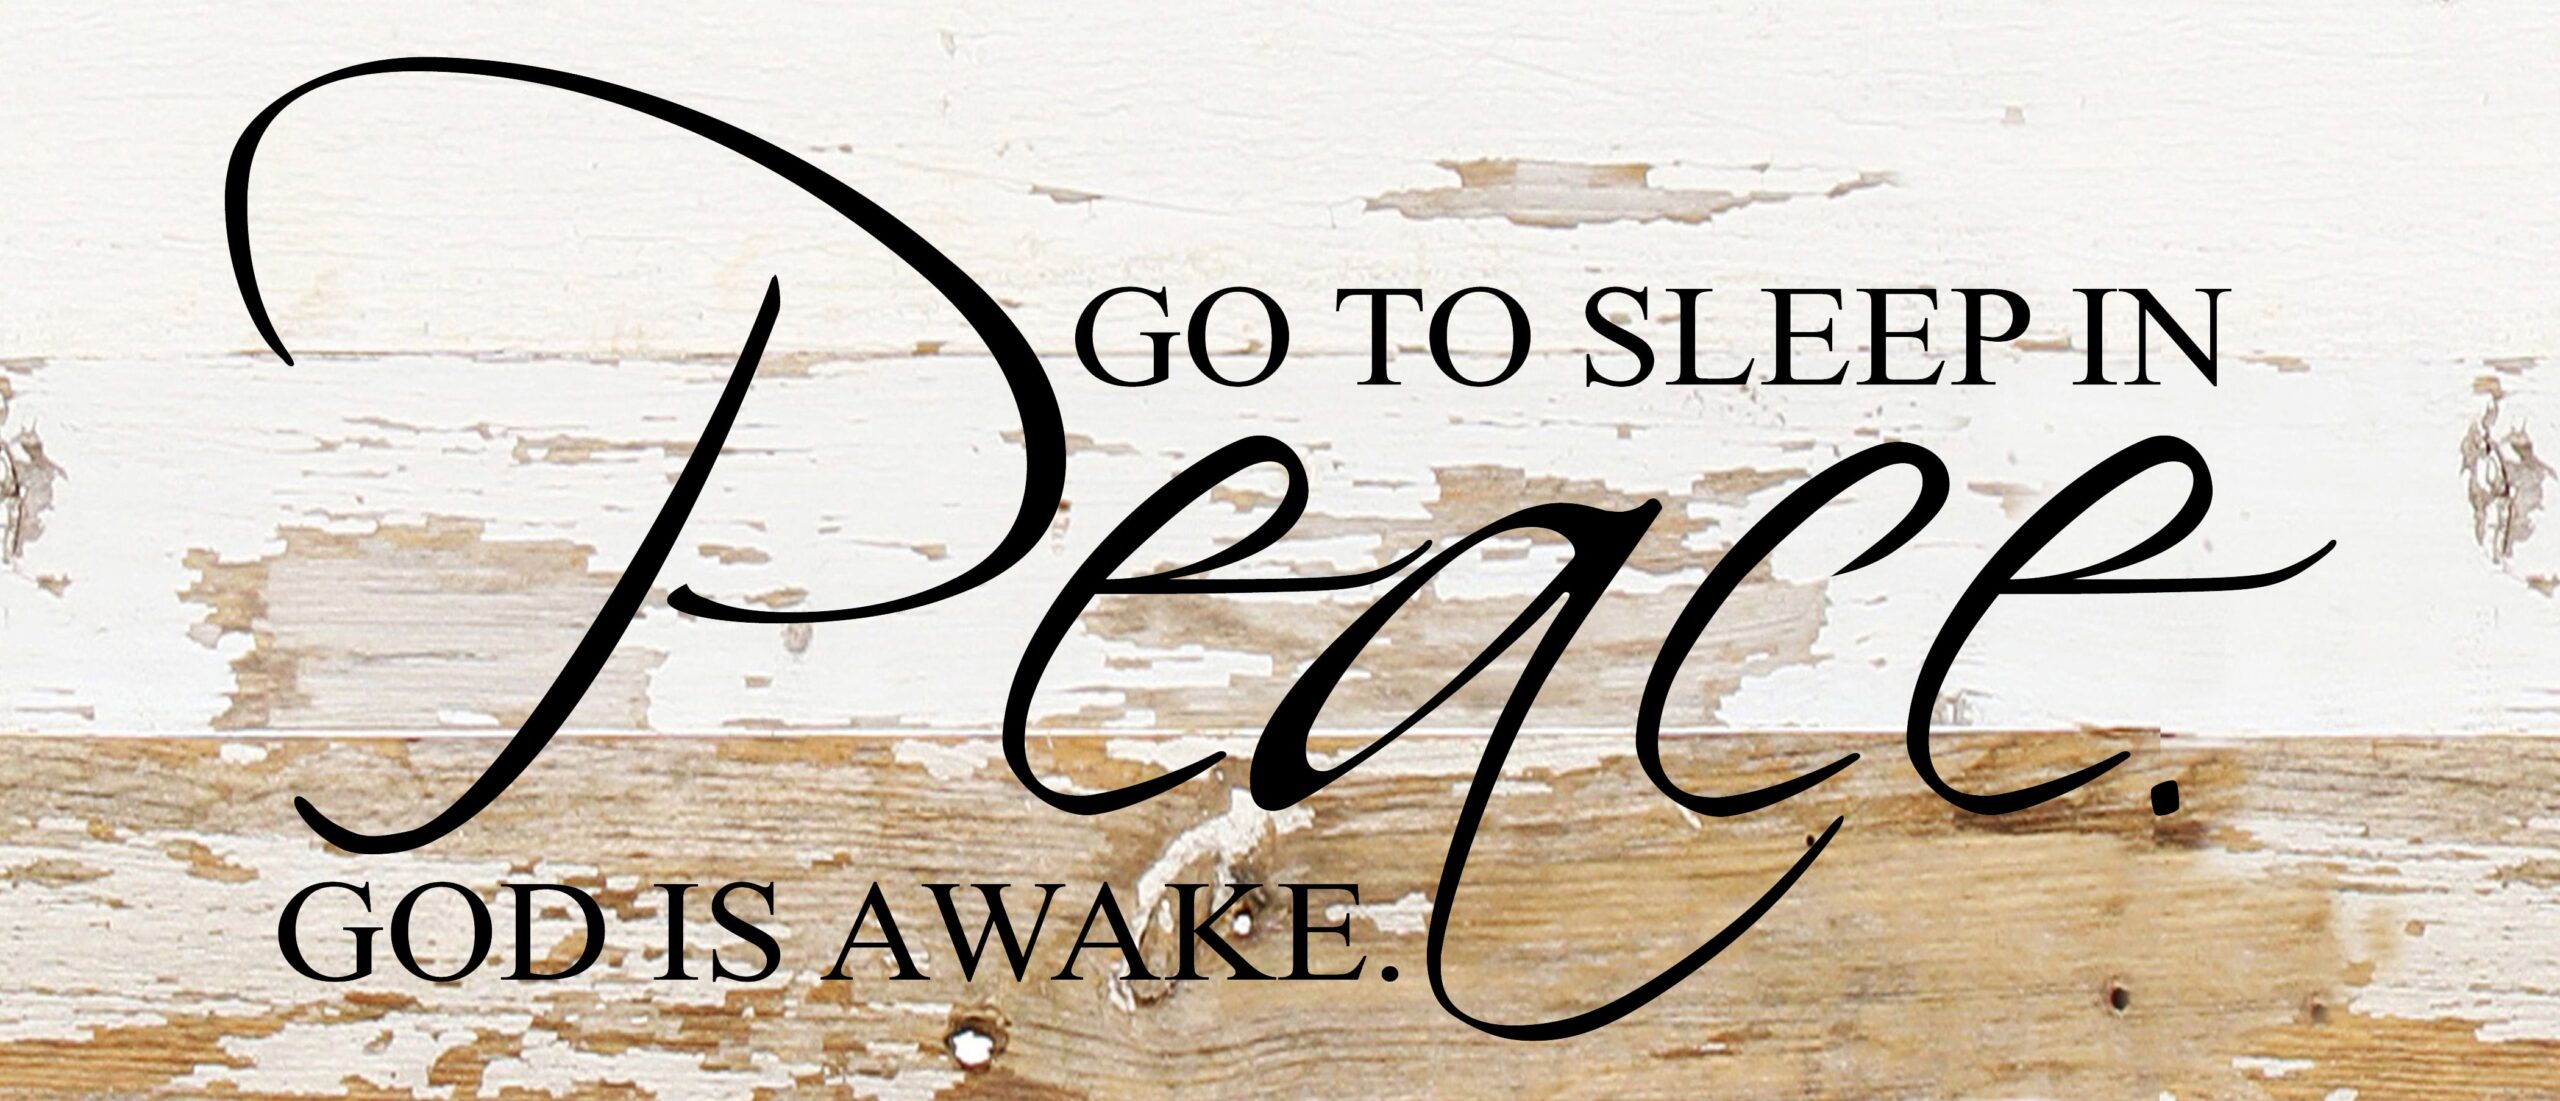 Go to sleep in peace. God is awake. / 14"x6" Reclaimed Wood Sign